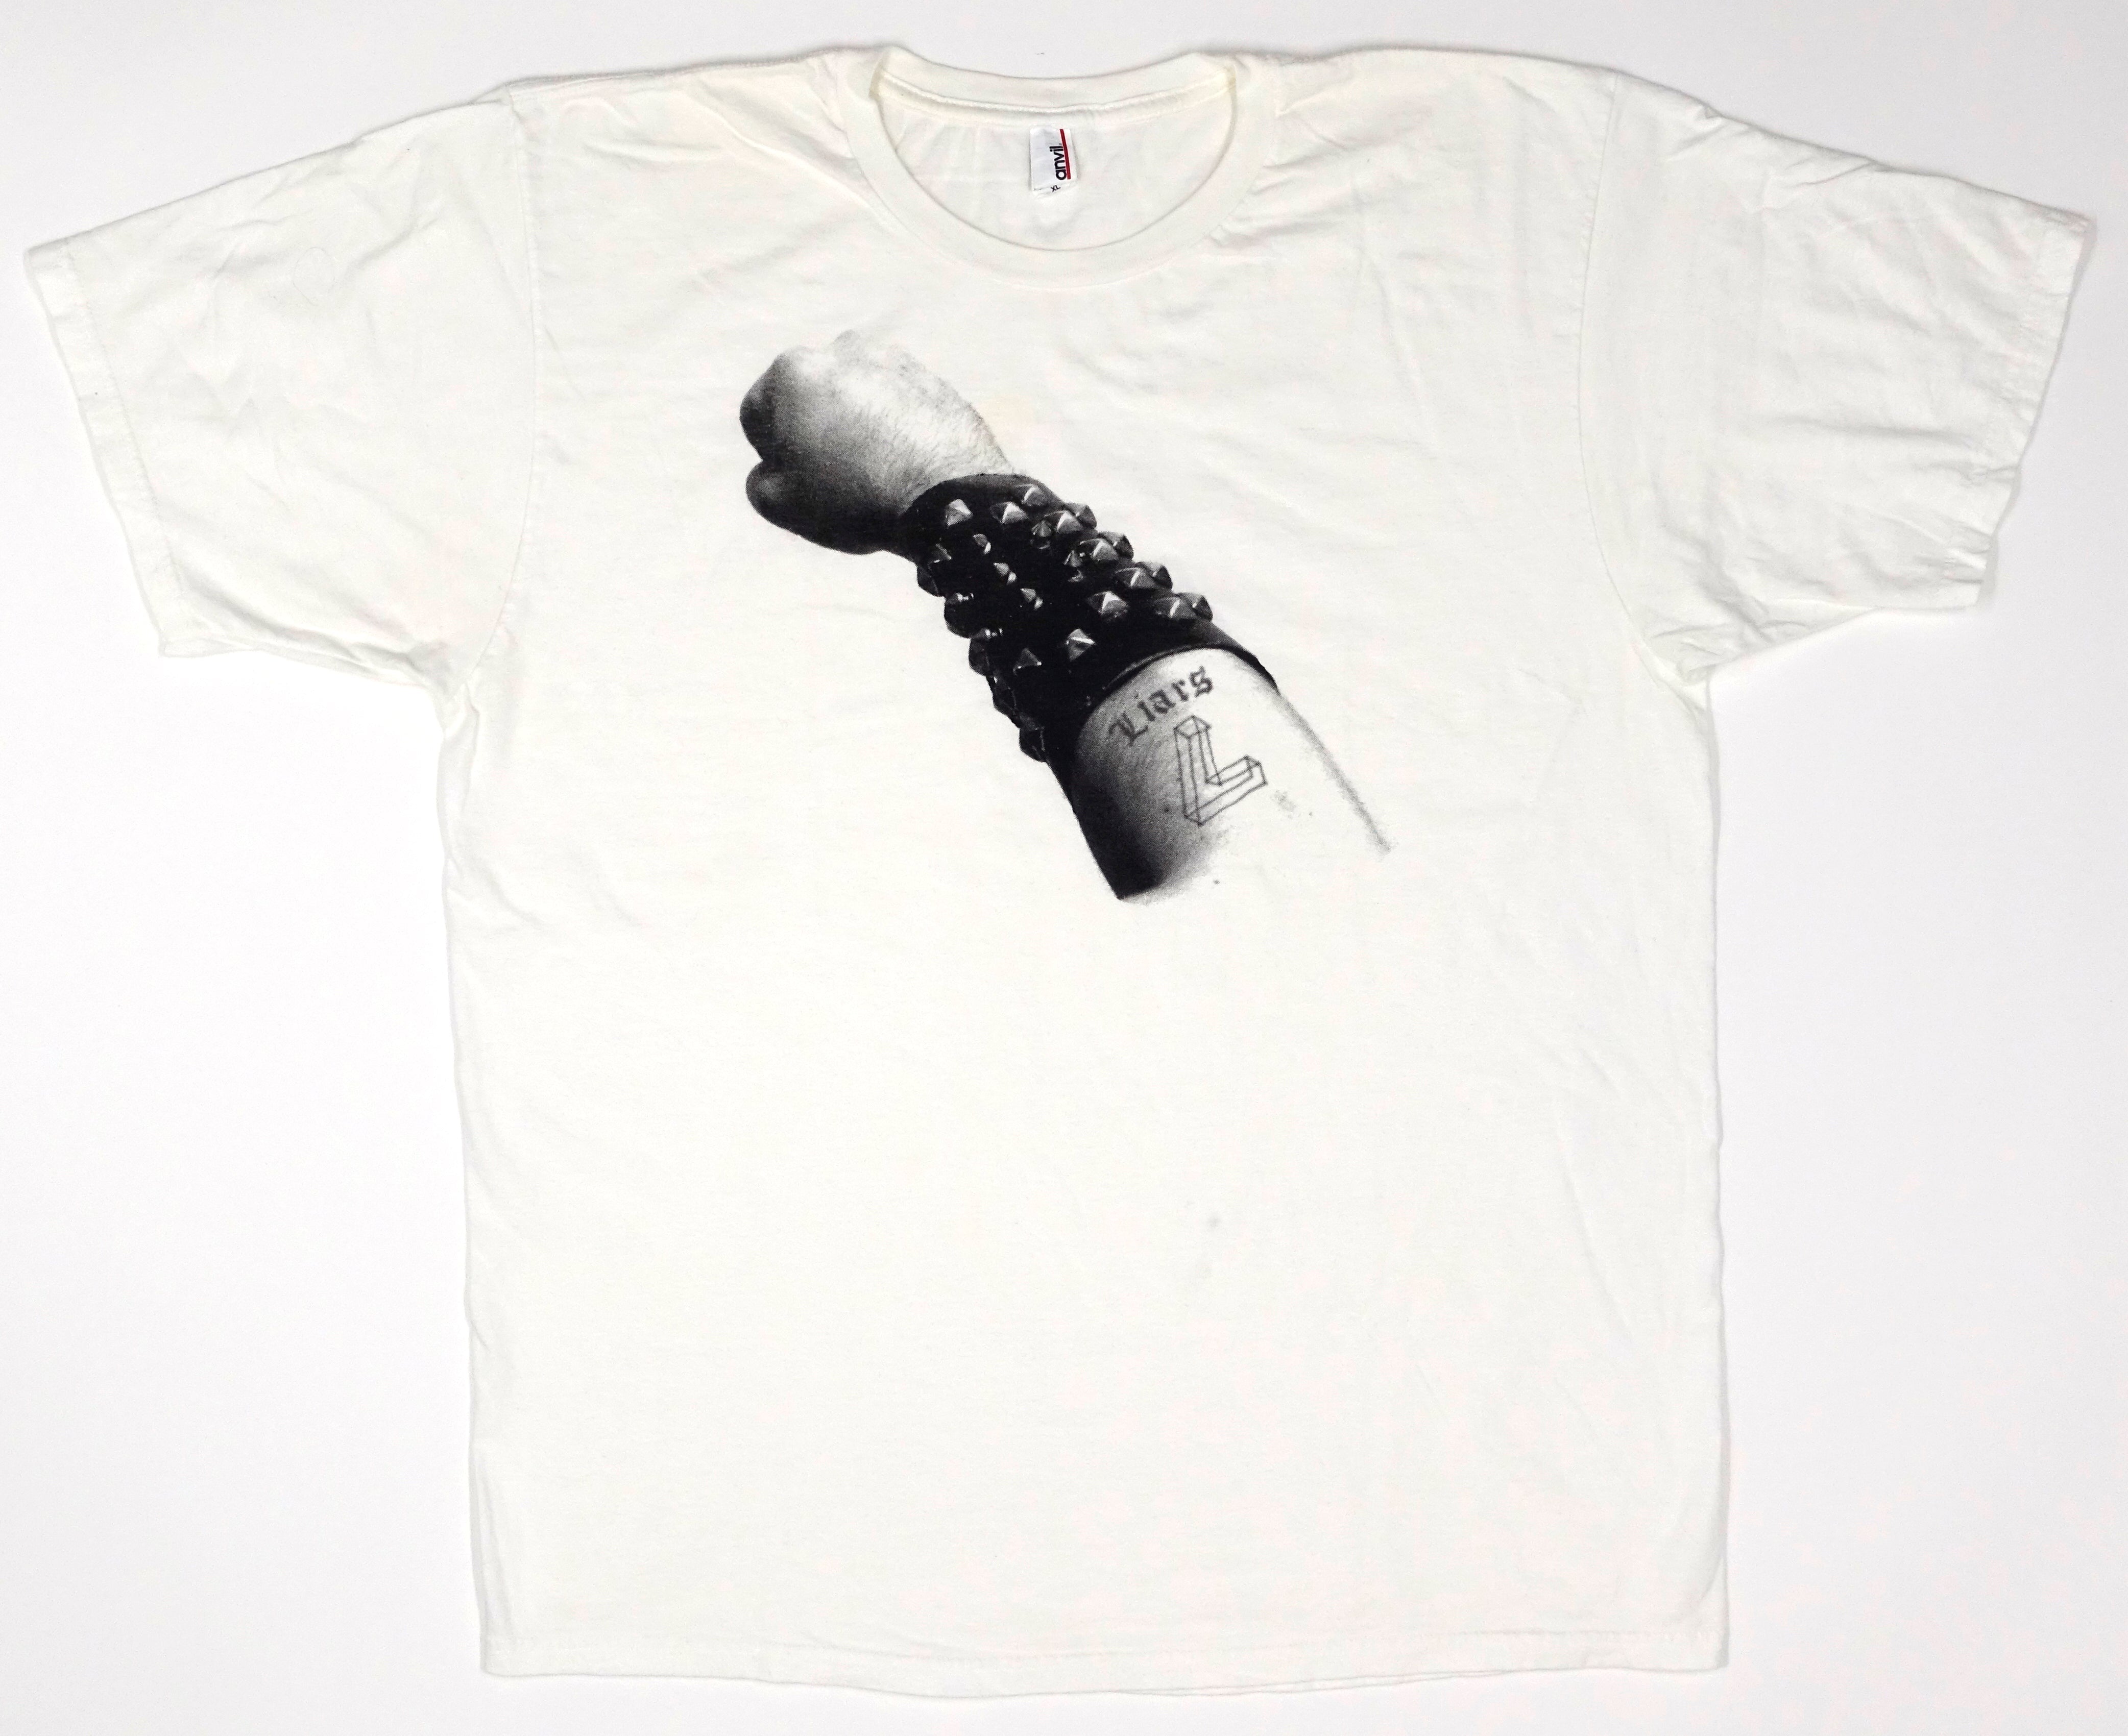 Liars - Punk Fist 2010 Tour Shirt Size XL